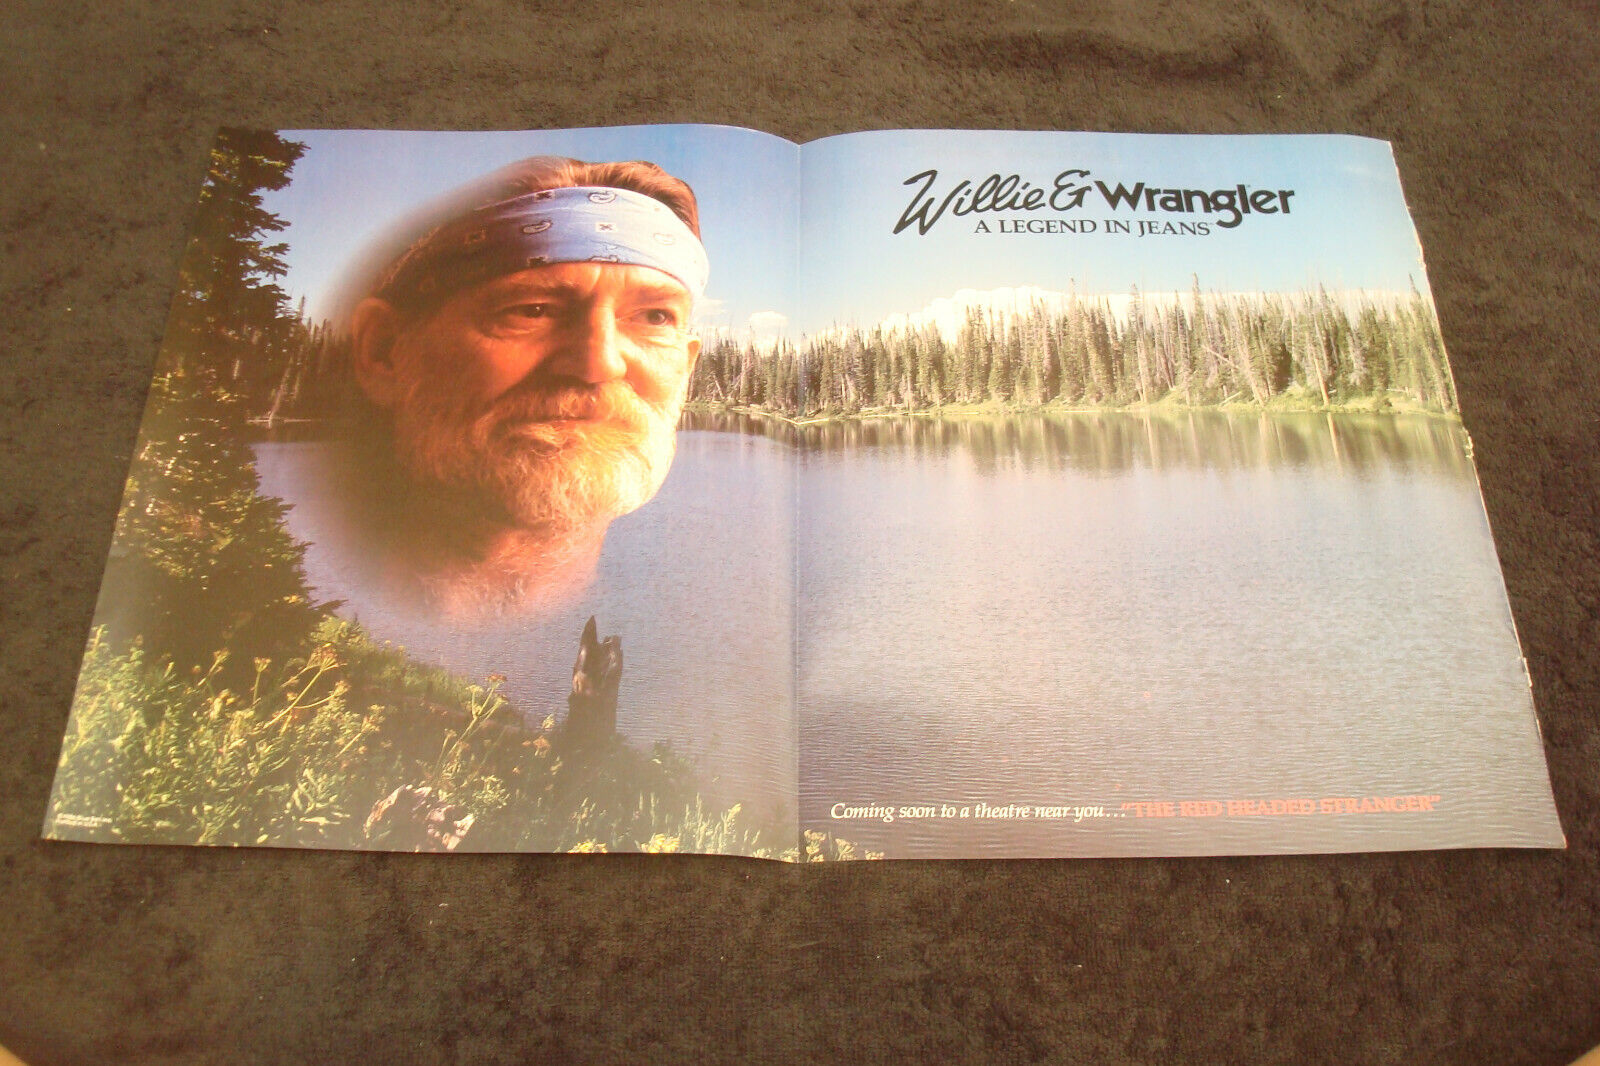 WILLIE NELSON 1986 ad Willie & Wranger A Legend in Jeans for Red Headed Stranger